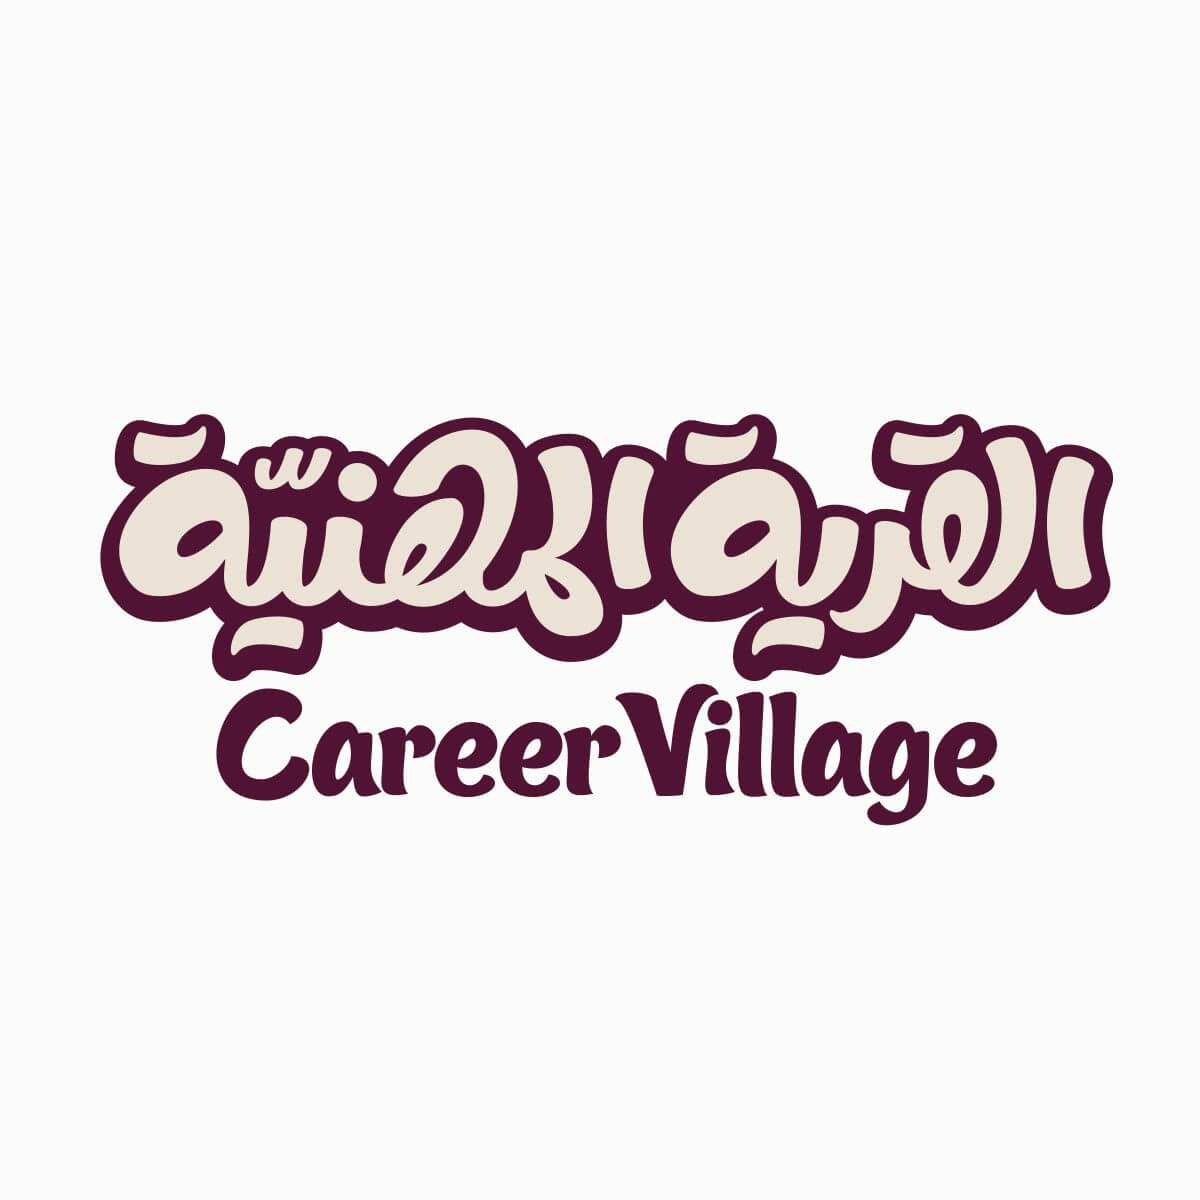 Career Village 2019